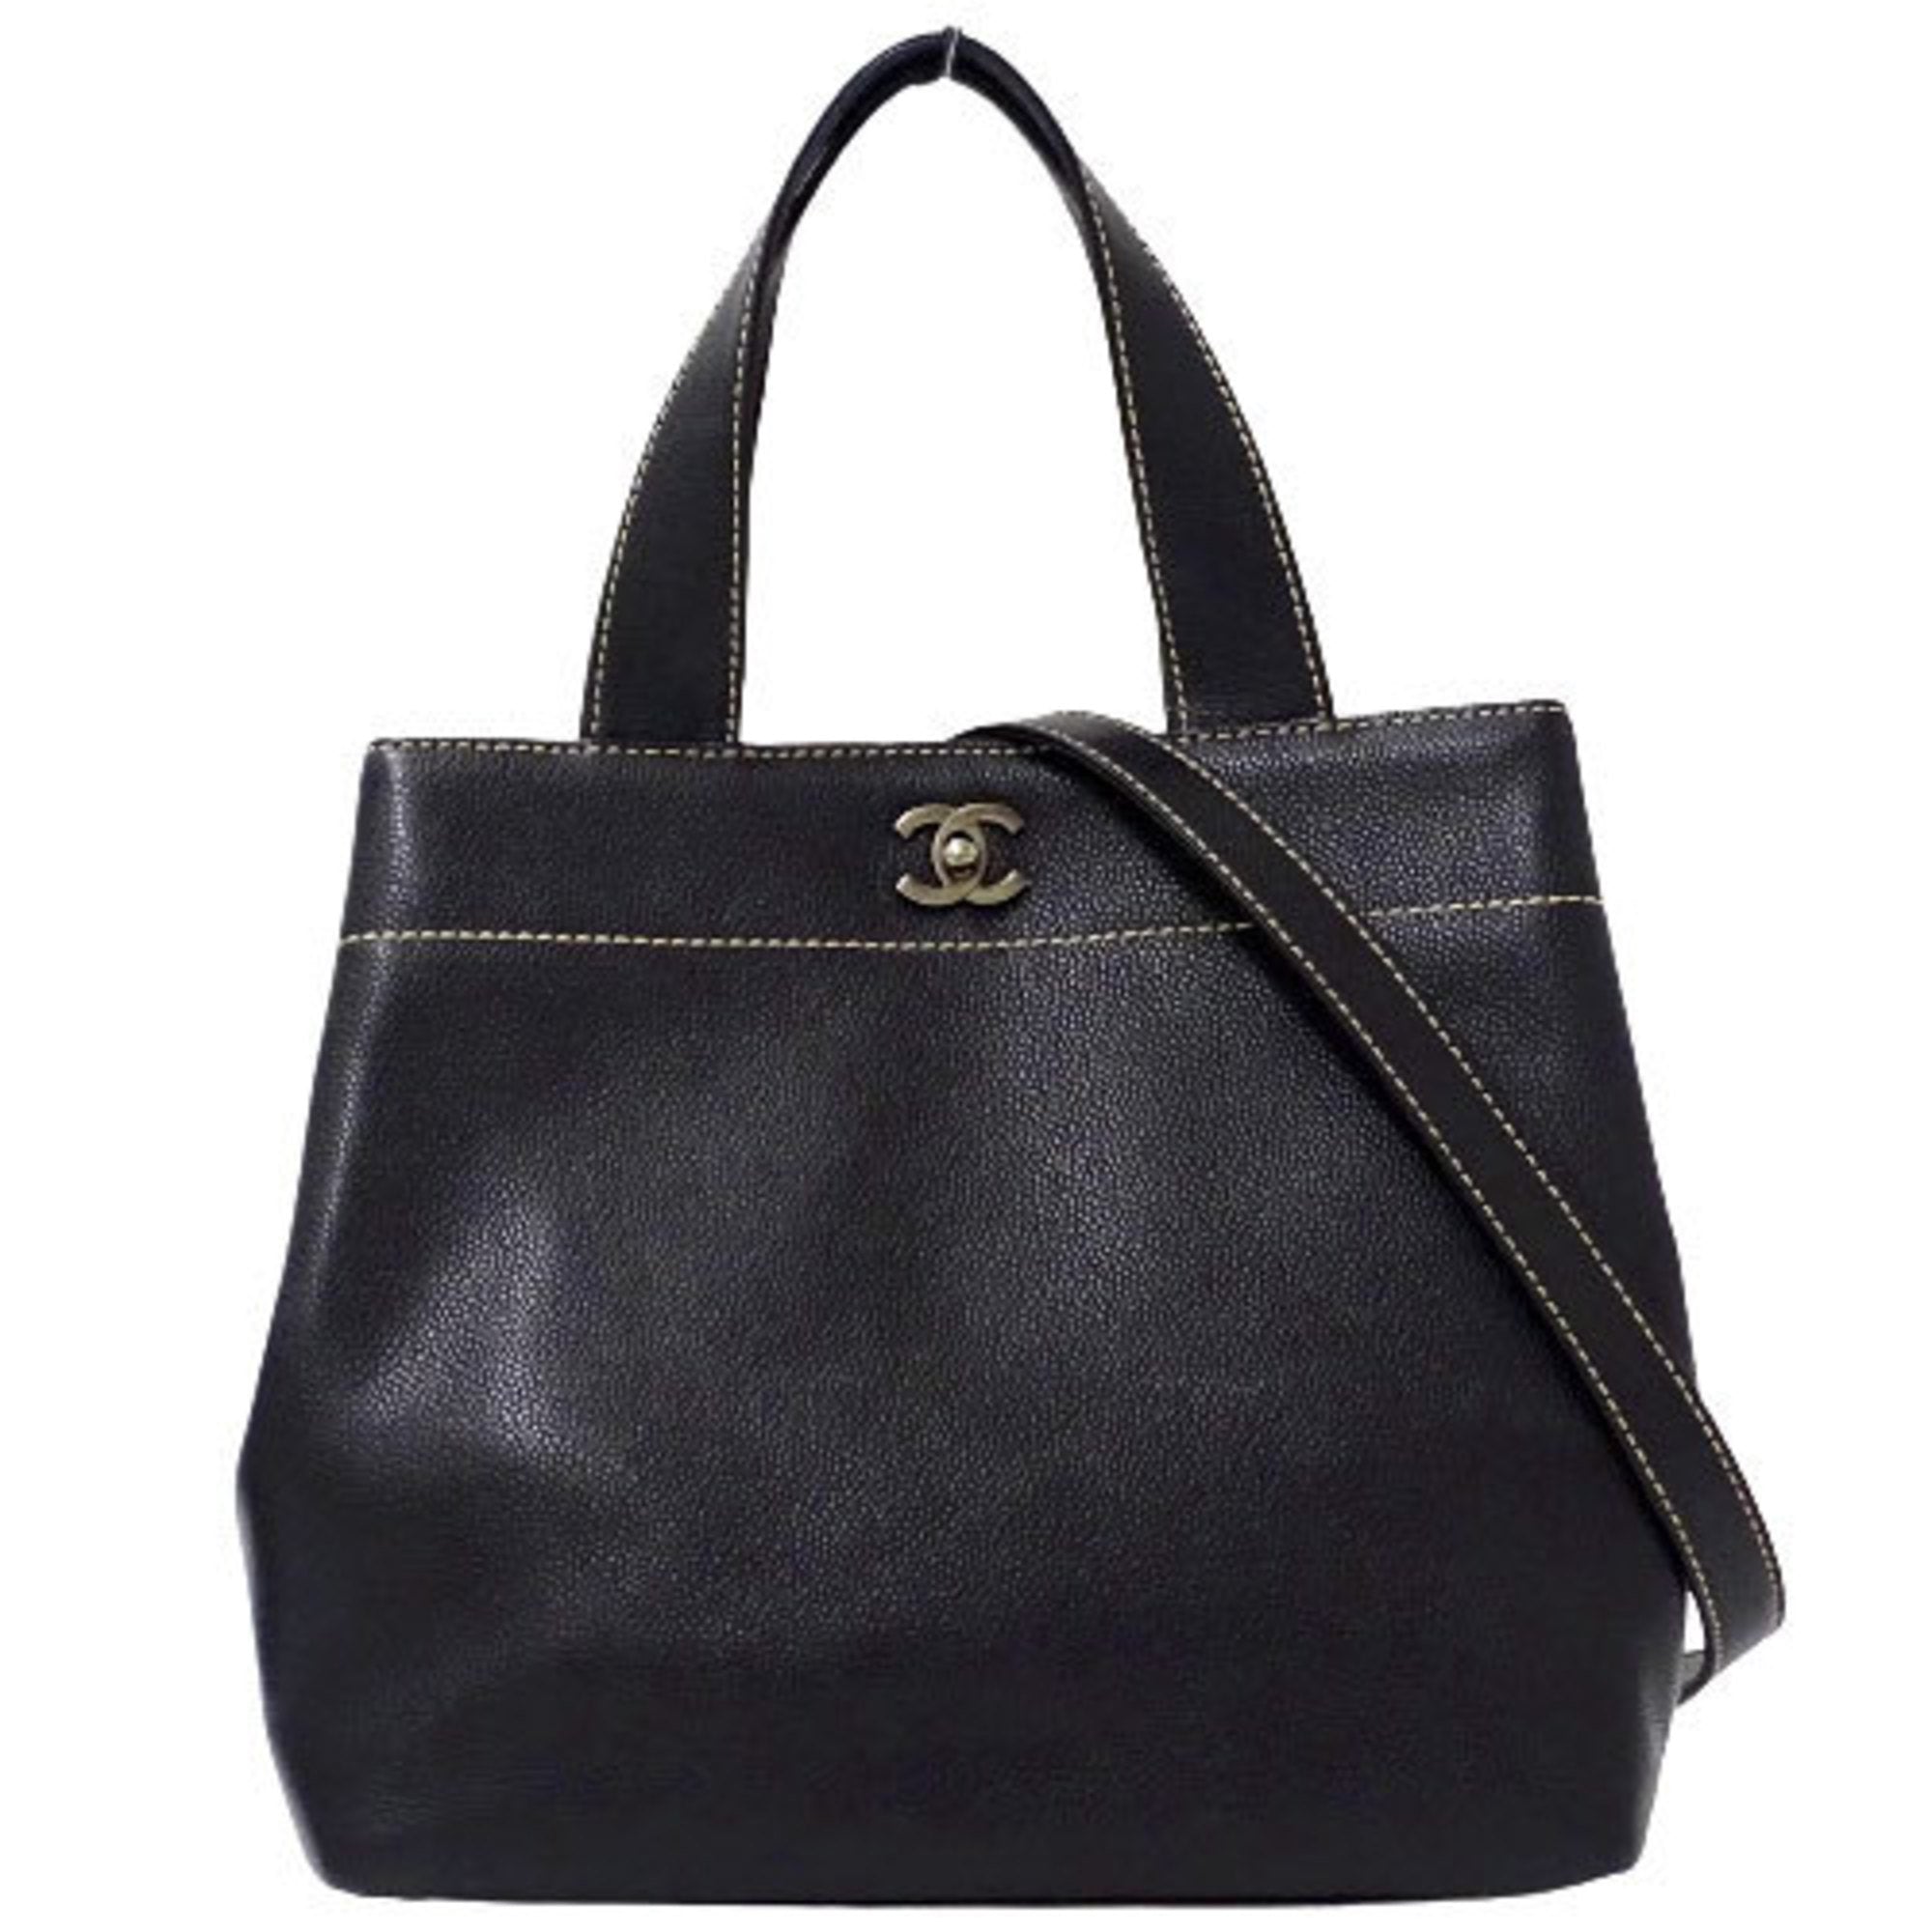 Chanel bag Lady's handbag shoulder 2way caviar skin black